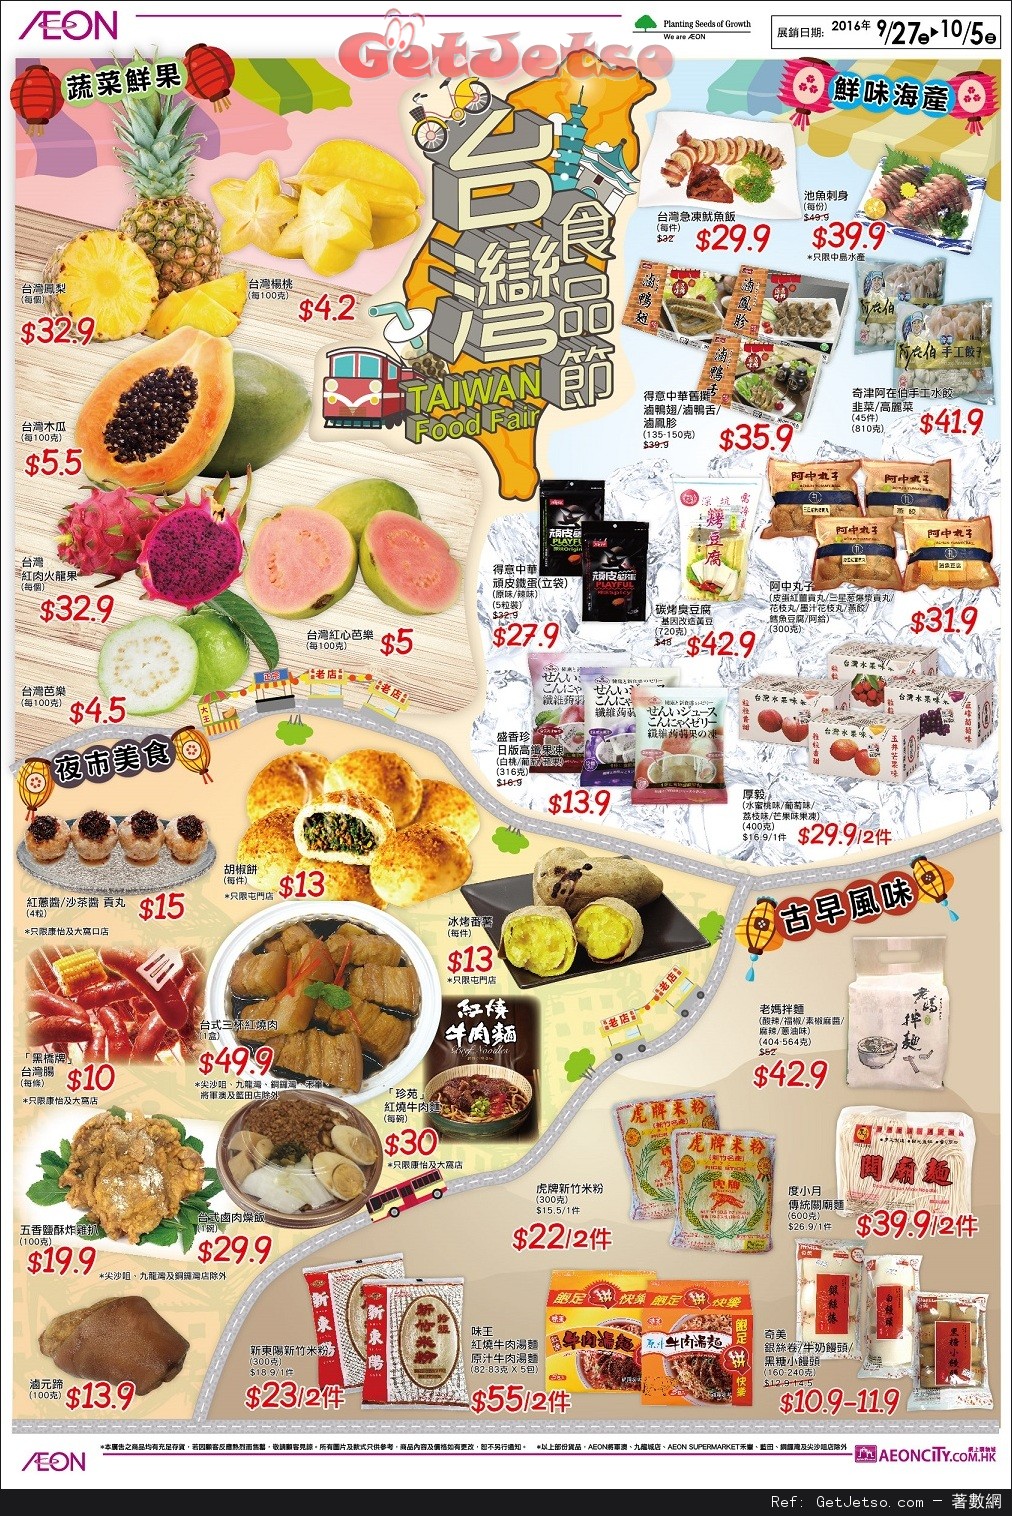 AEON 台灣食品節購物優惠(至16年10月5日)圖片2